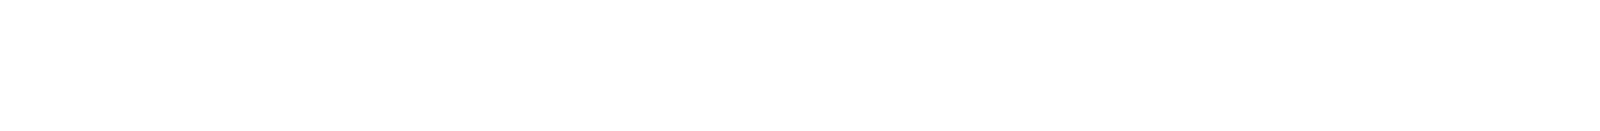 The Shyft Group Logo groß für dunkle Hintergründe (transparentes PNG)